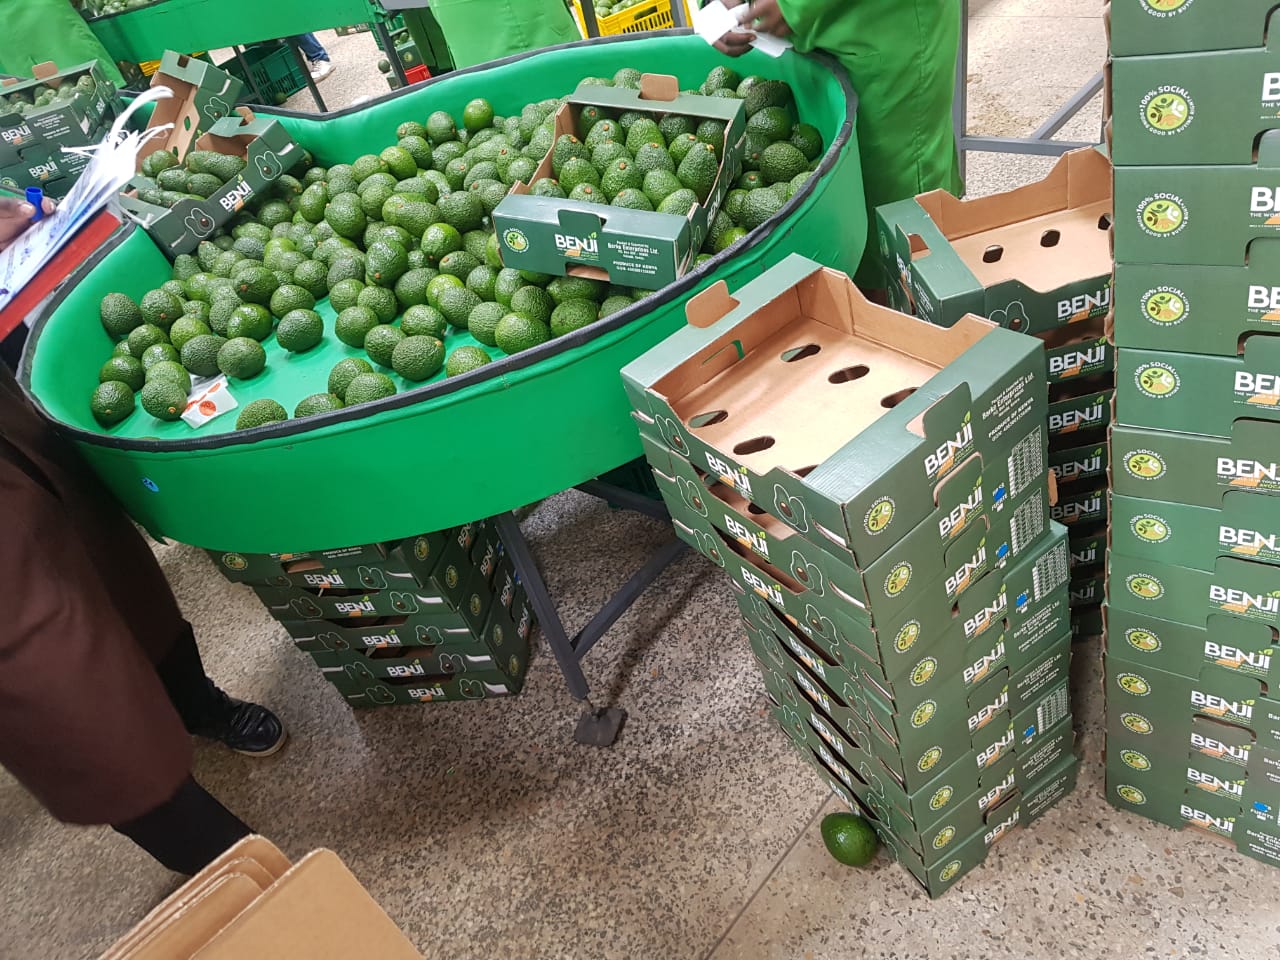 Hass avocadoes, first BENJI packaging - Beva Fruits International (BFI)